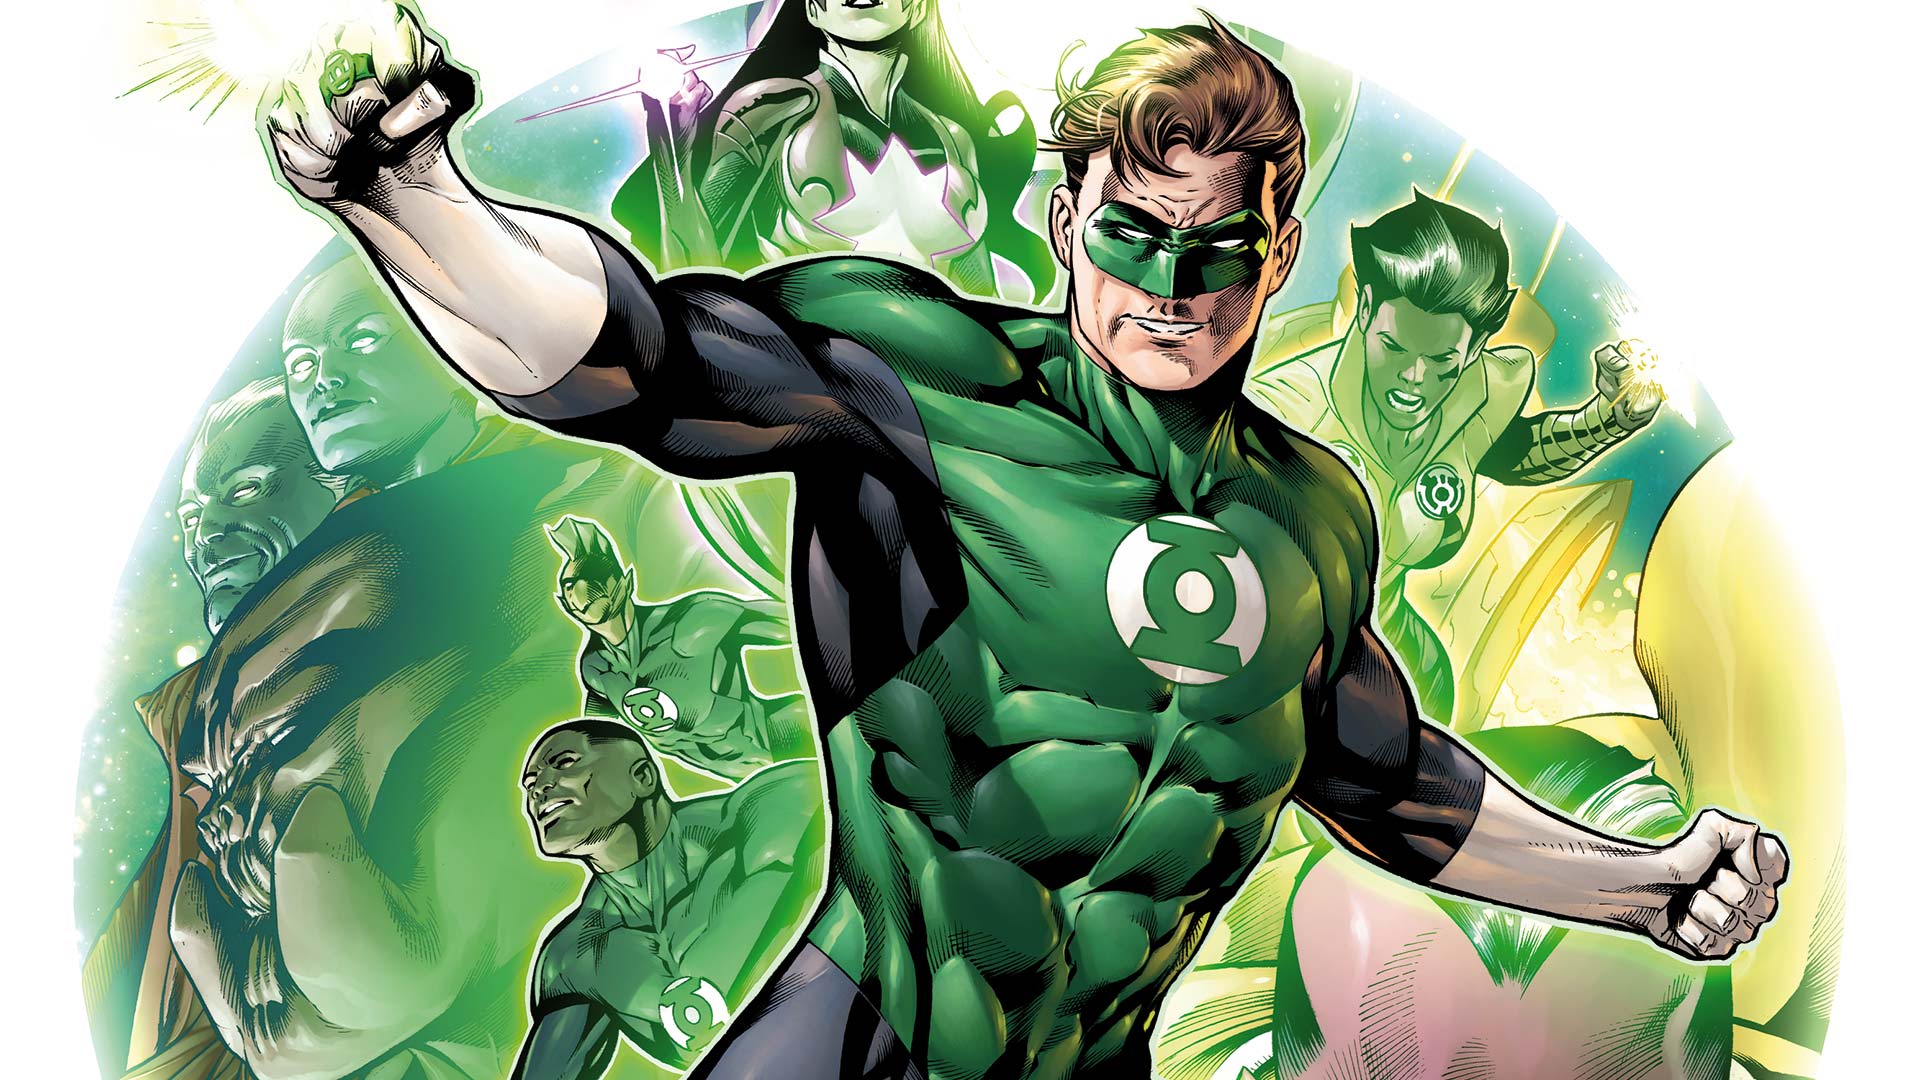 Hal Jordan in "Green Lantern Corps" - DC Comics.